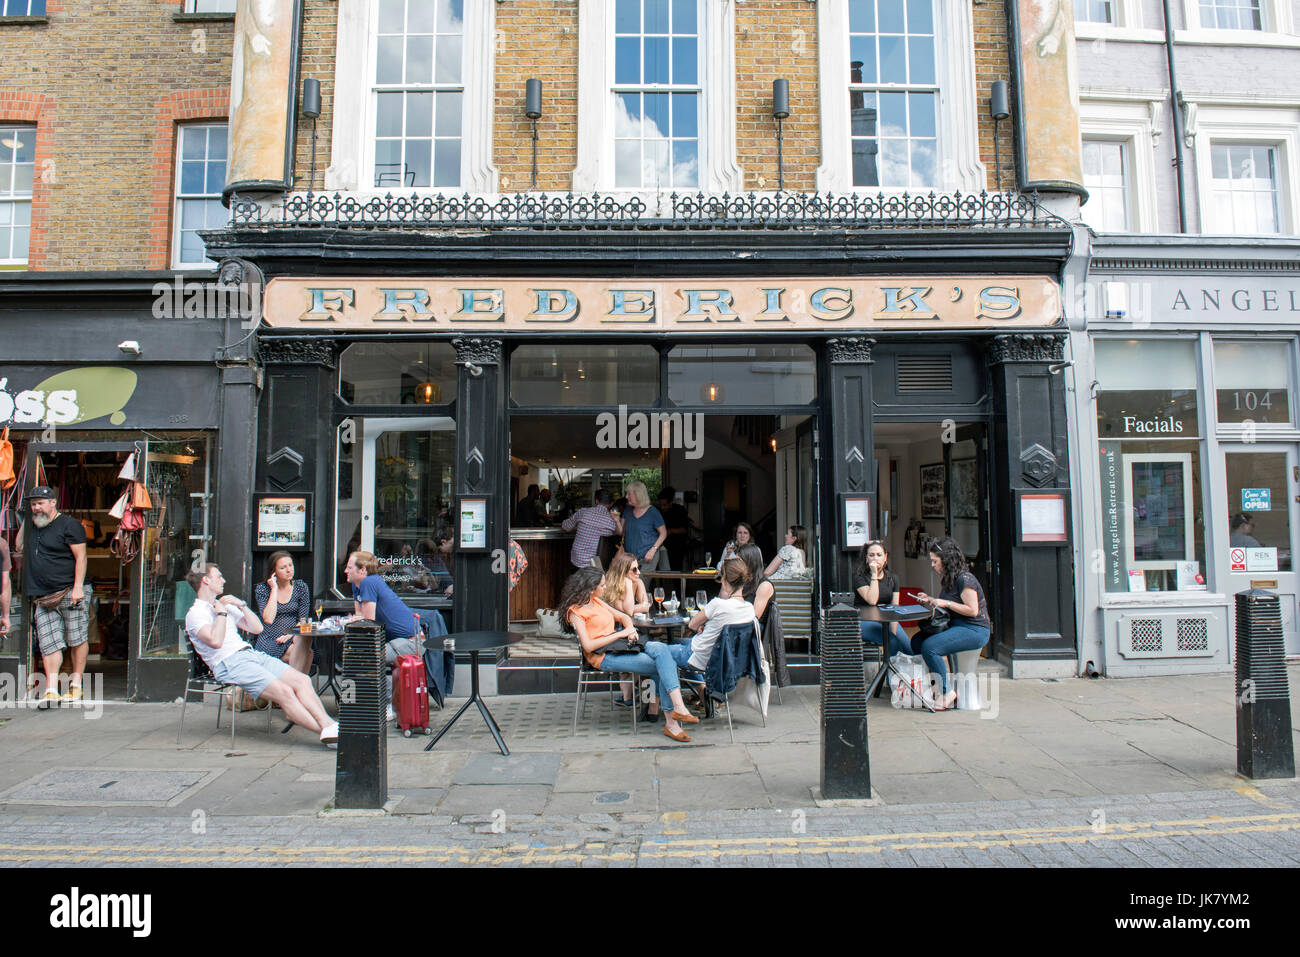 Frederick's restaurant and bar, Camden Passage, London Borough of Islington, England Britain UK Stock Photo